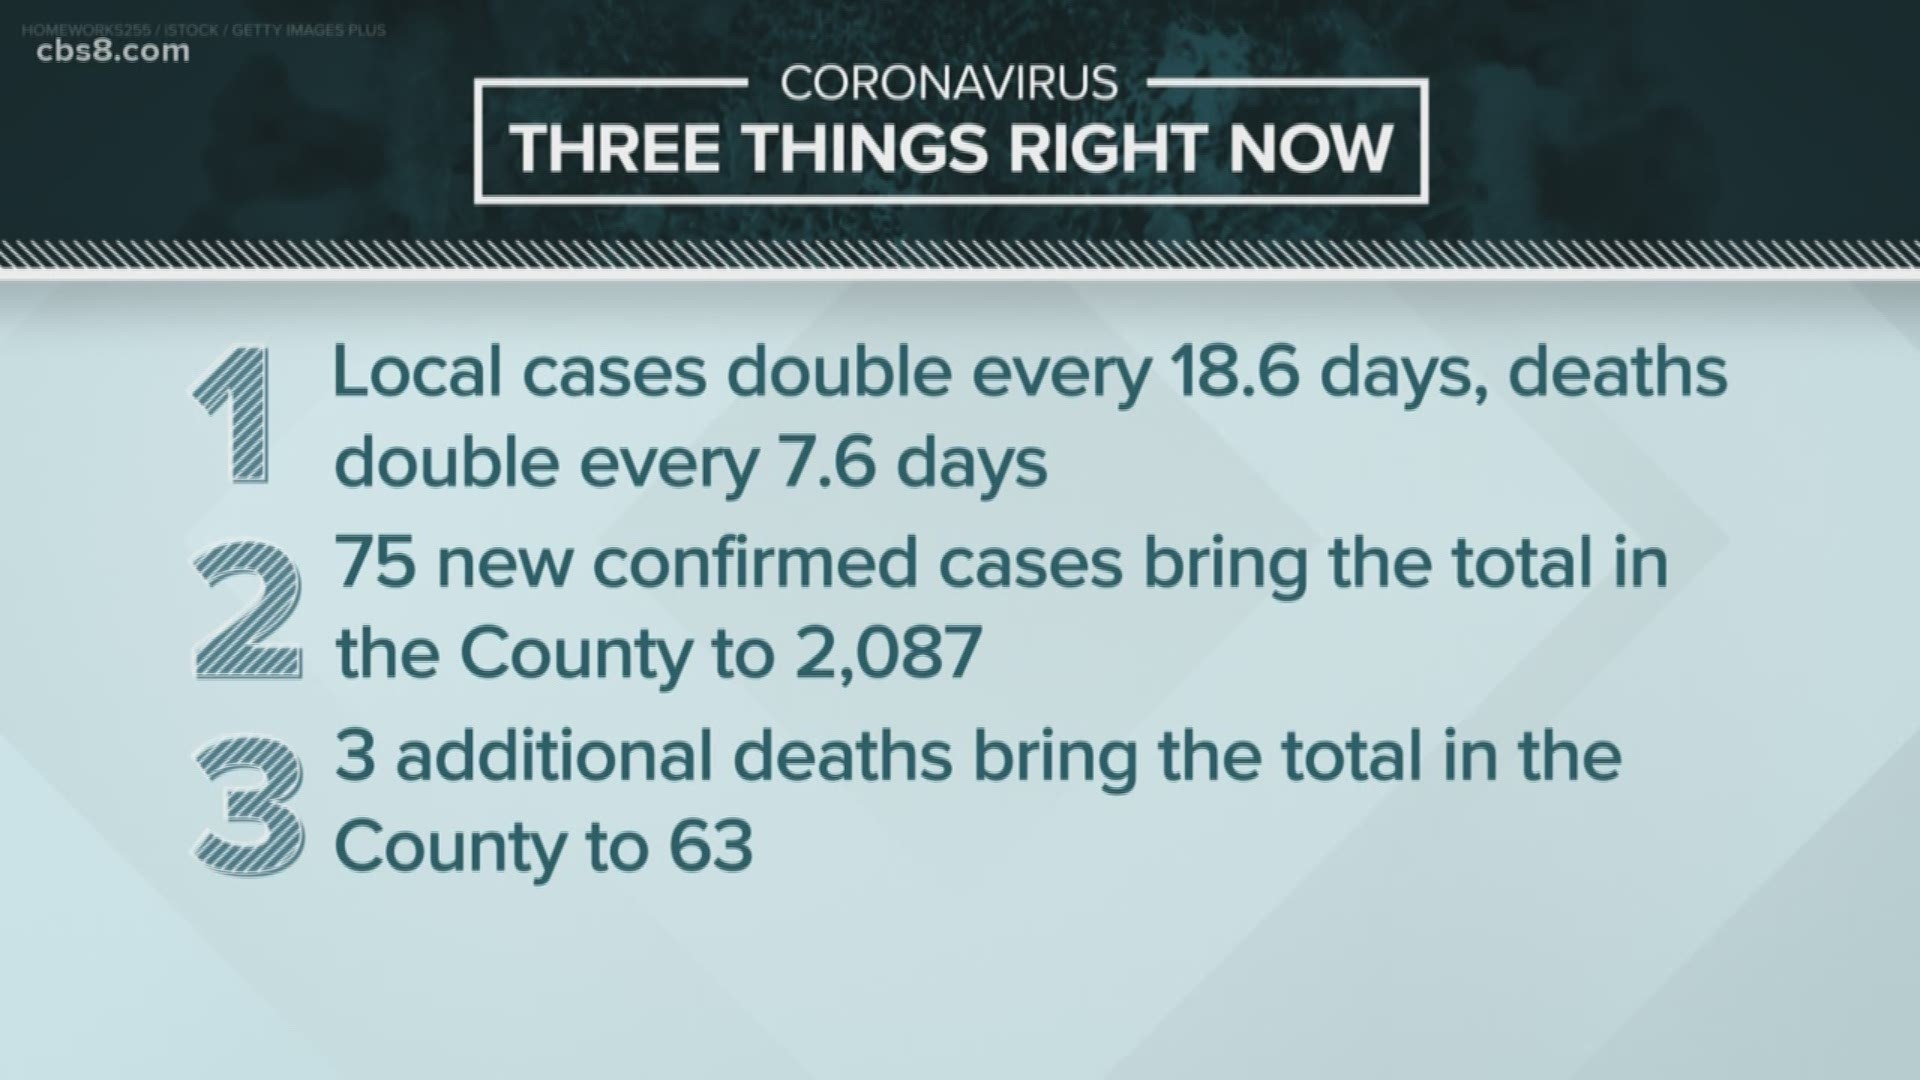 Coronavirus in San Diego and California - April 16, 2020 evening update